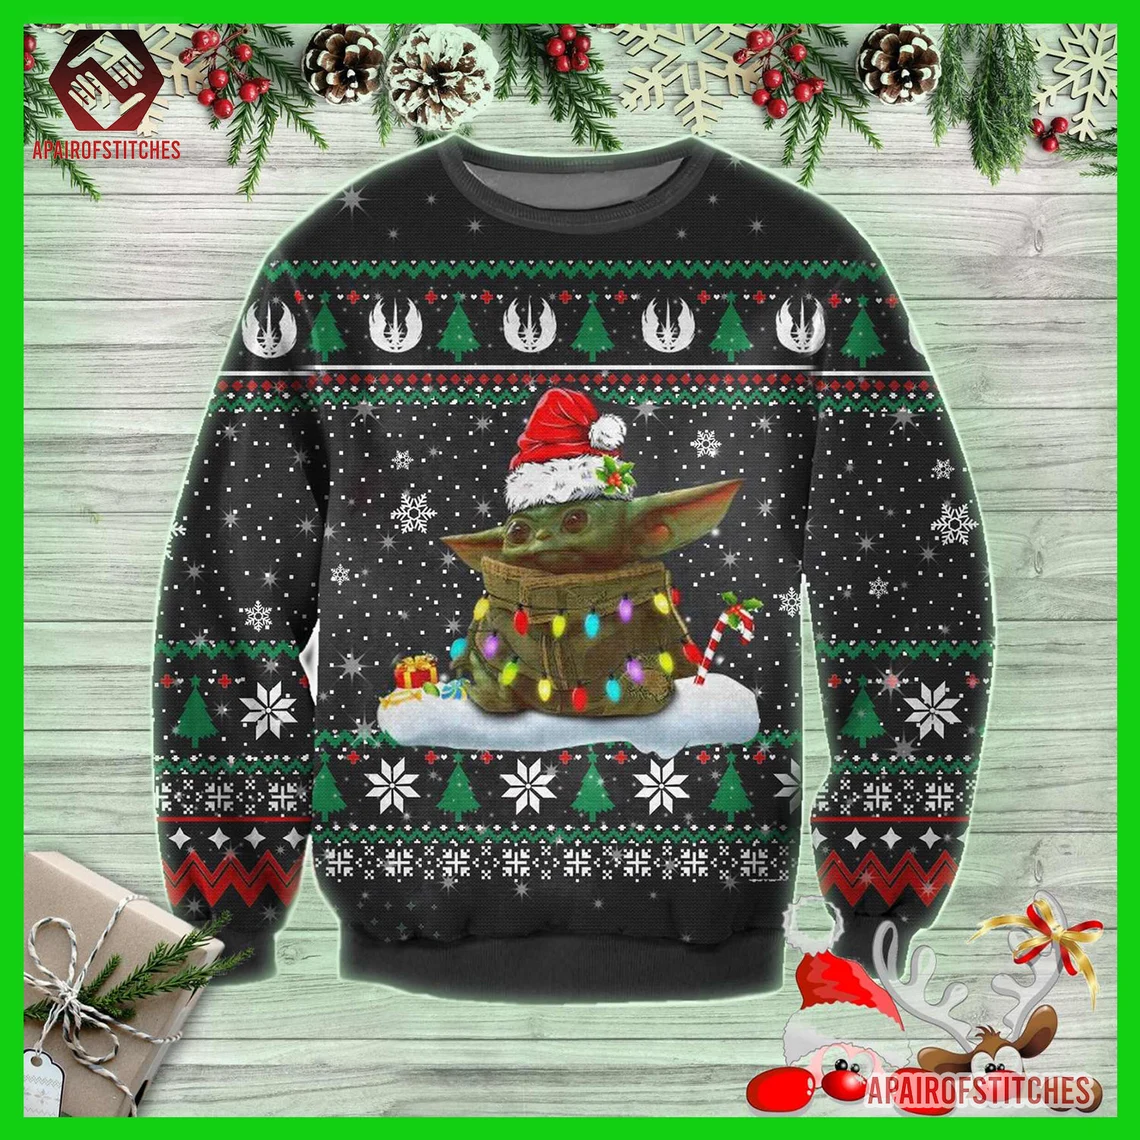 Baby Yoda Ugly Christmas Sweater